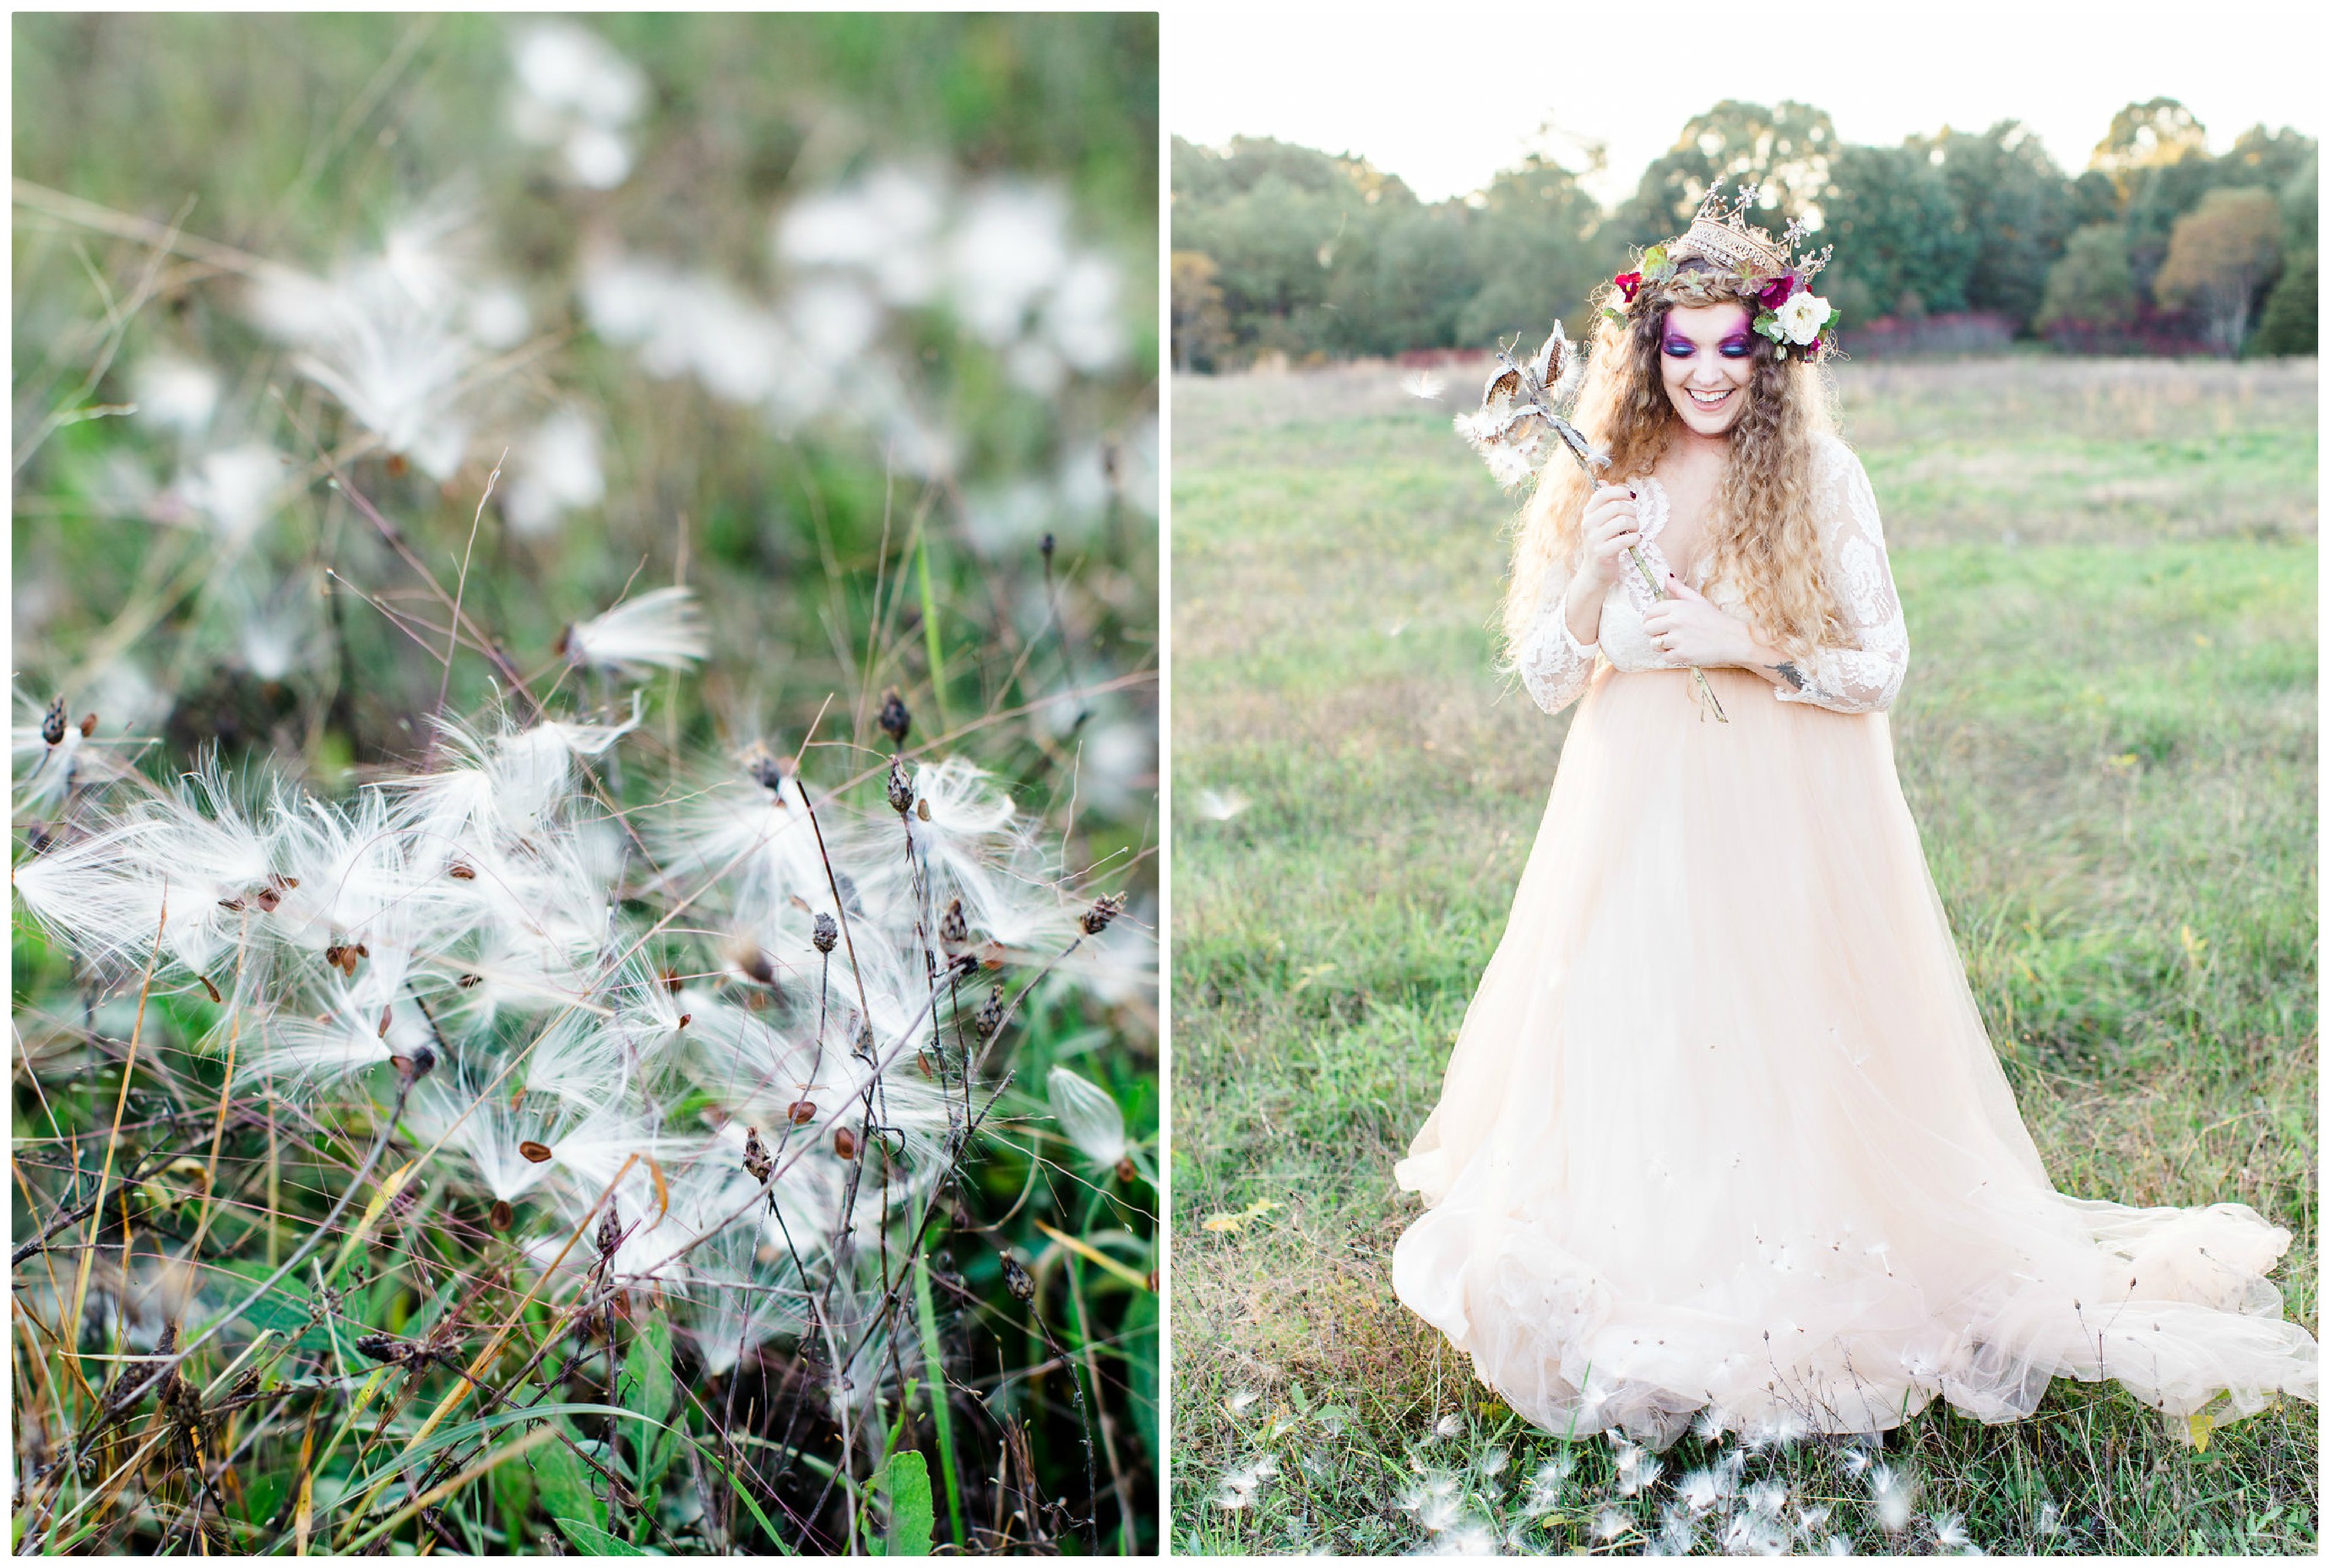 Blush Wedding Dress | The Day's Design | Ashley Slater Photography